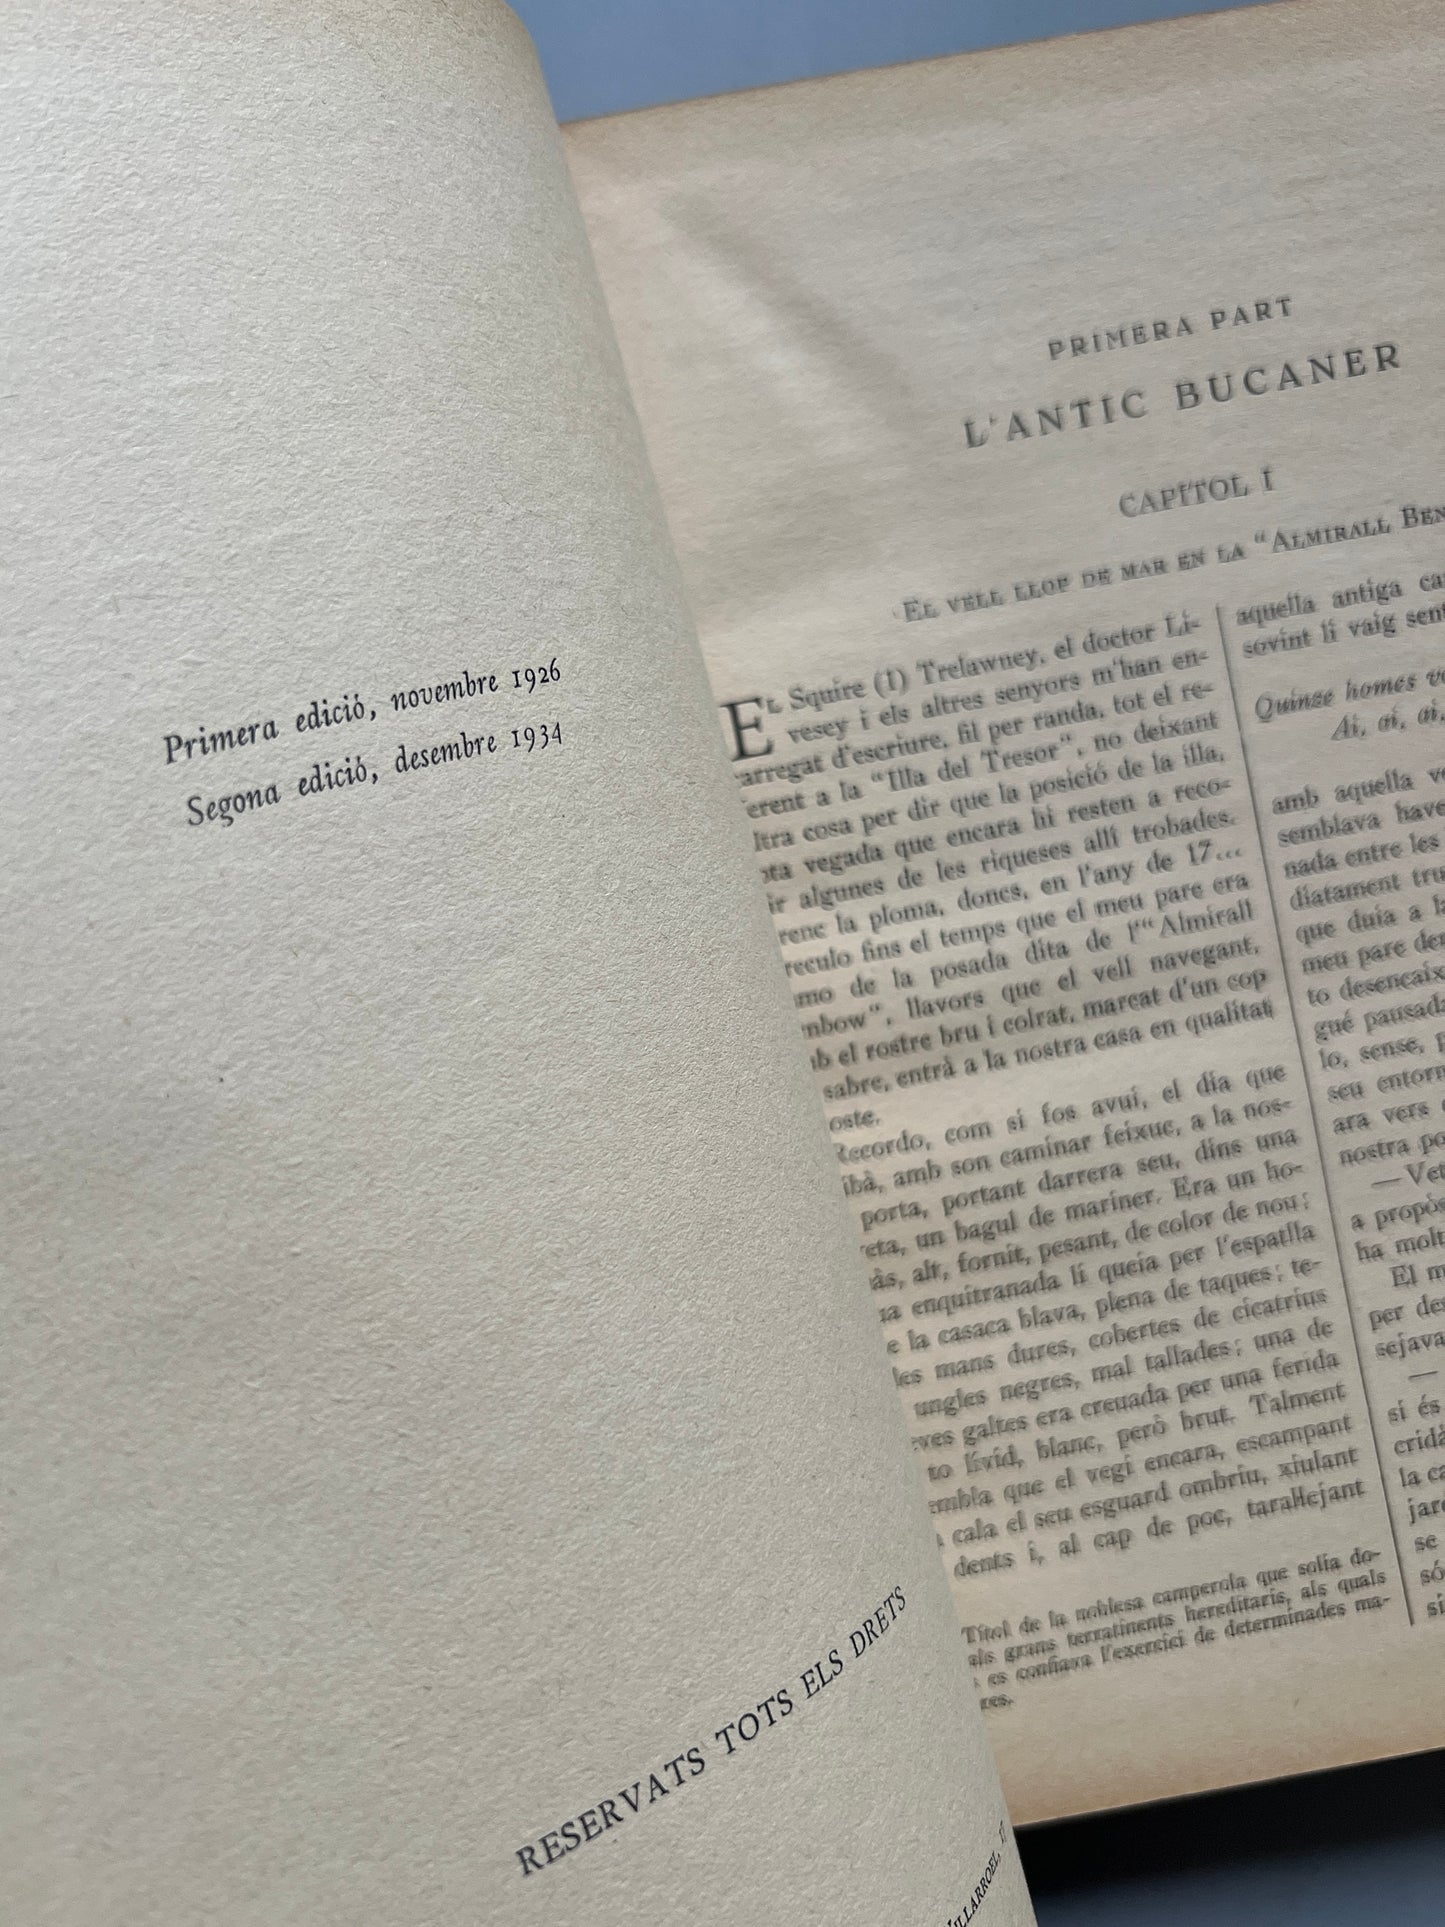 La illa del tresor, Robert Louis Stevenson - Editorial Mentora, 1934